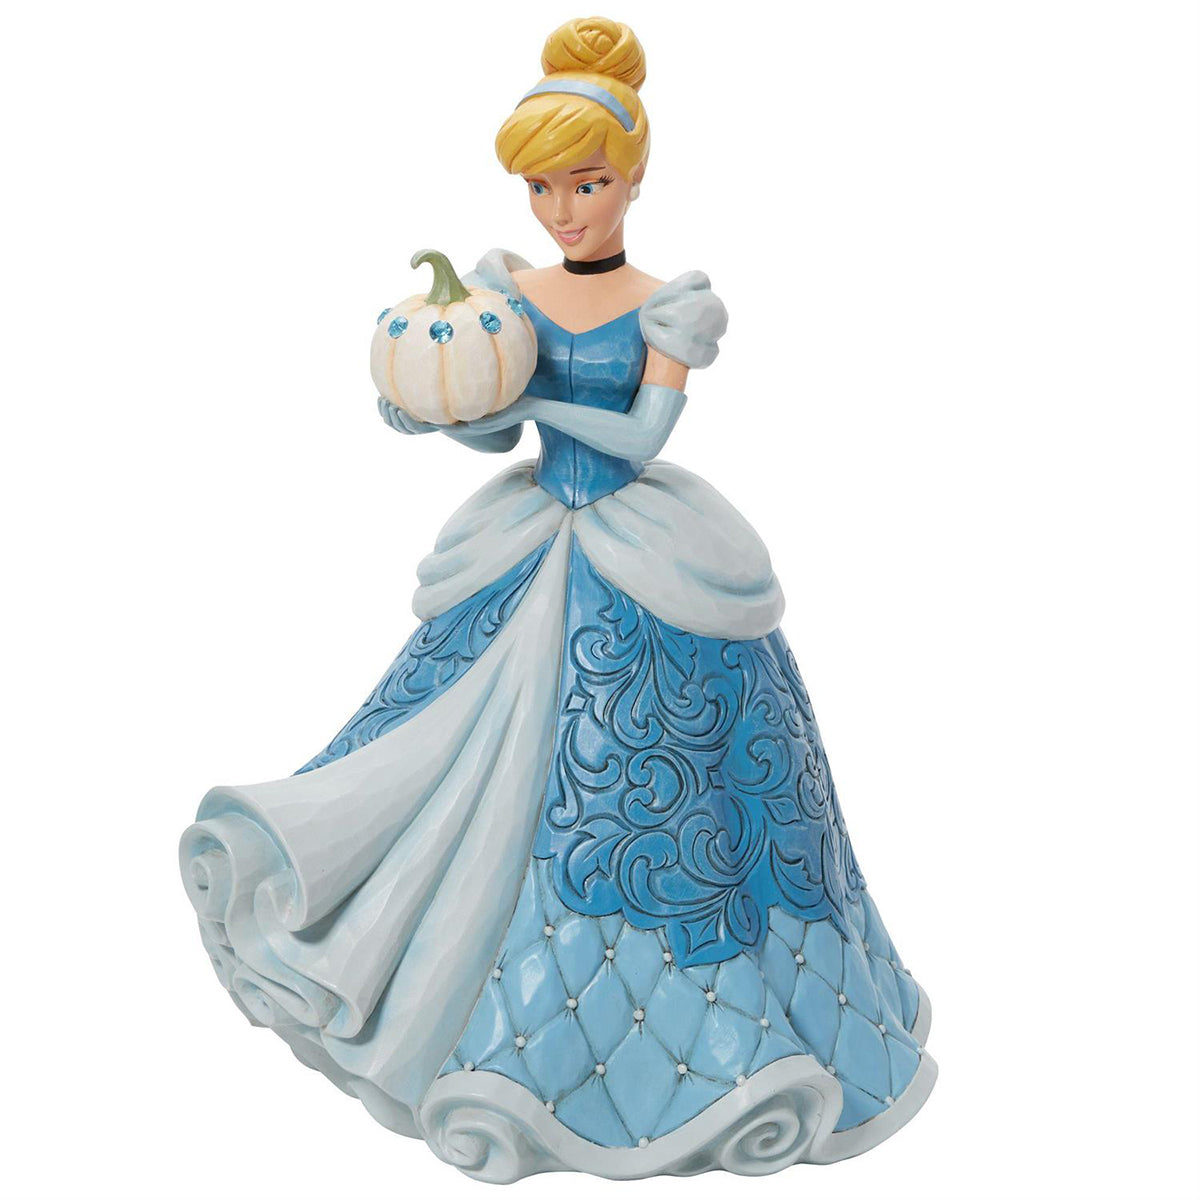 Cinderella Deluxe Figurine by Jim Shore